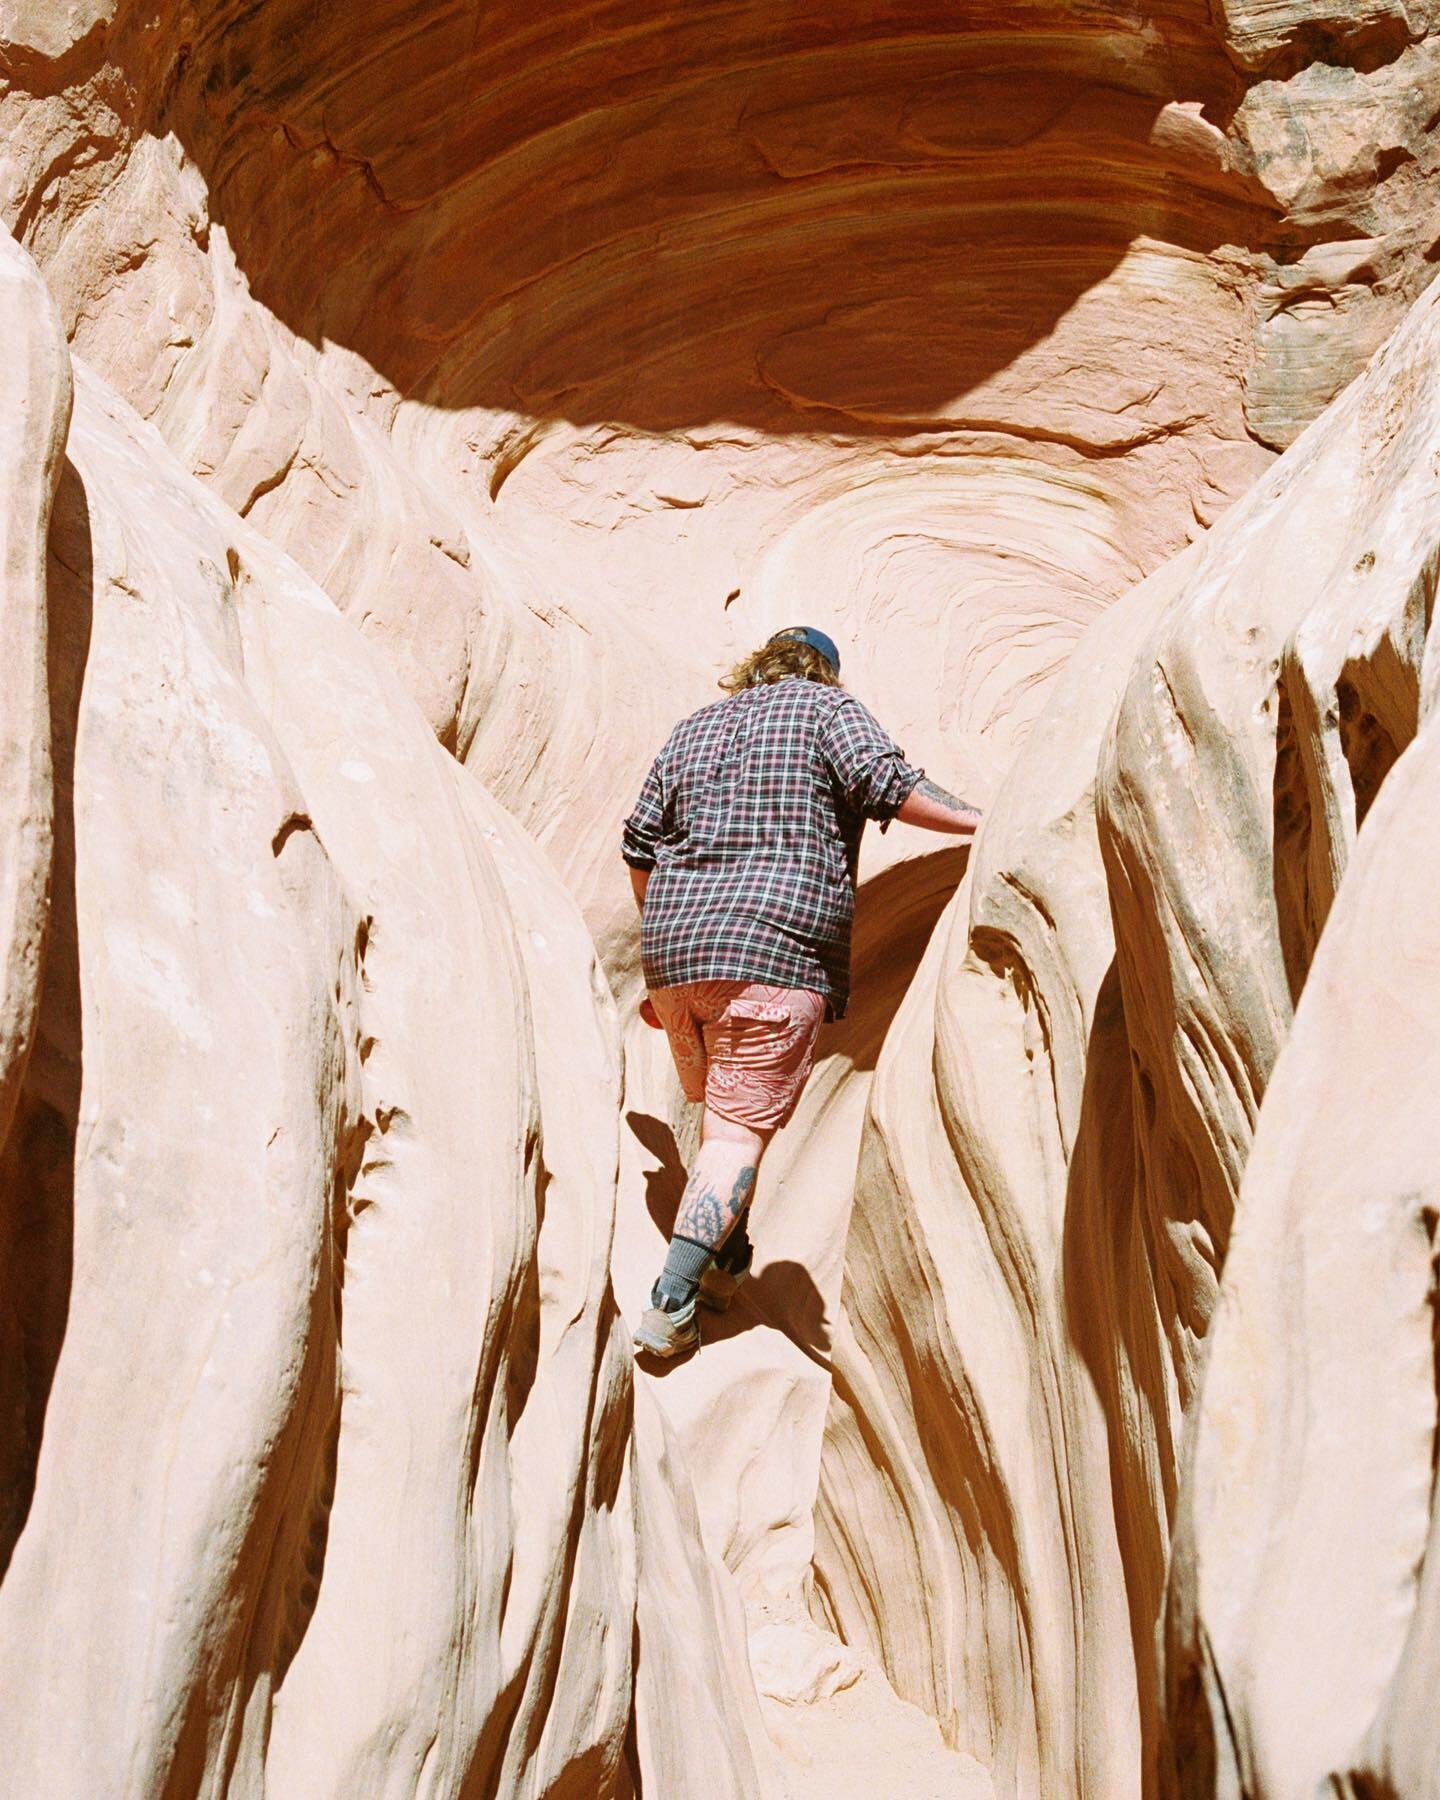 Hiking around the slot canyons with my love last week ❤️ #hiking #slotcanyon #utah #35mm #film #portra #kodak